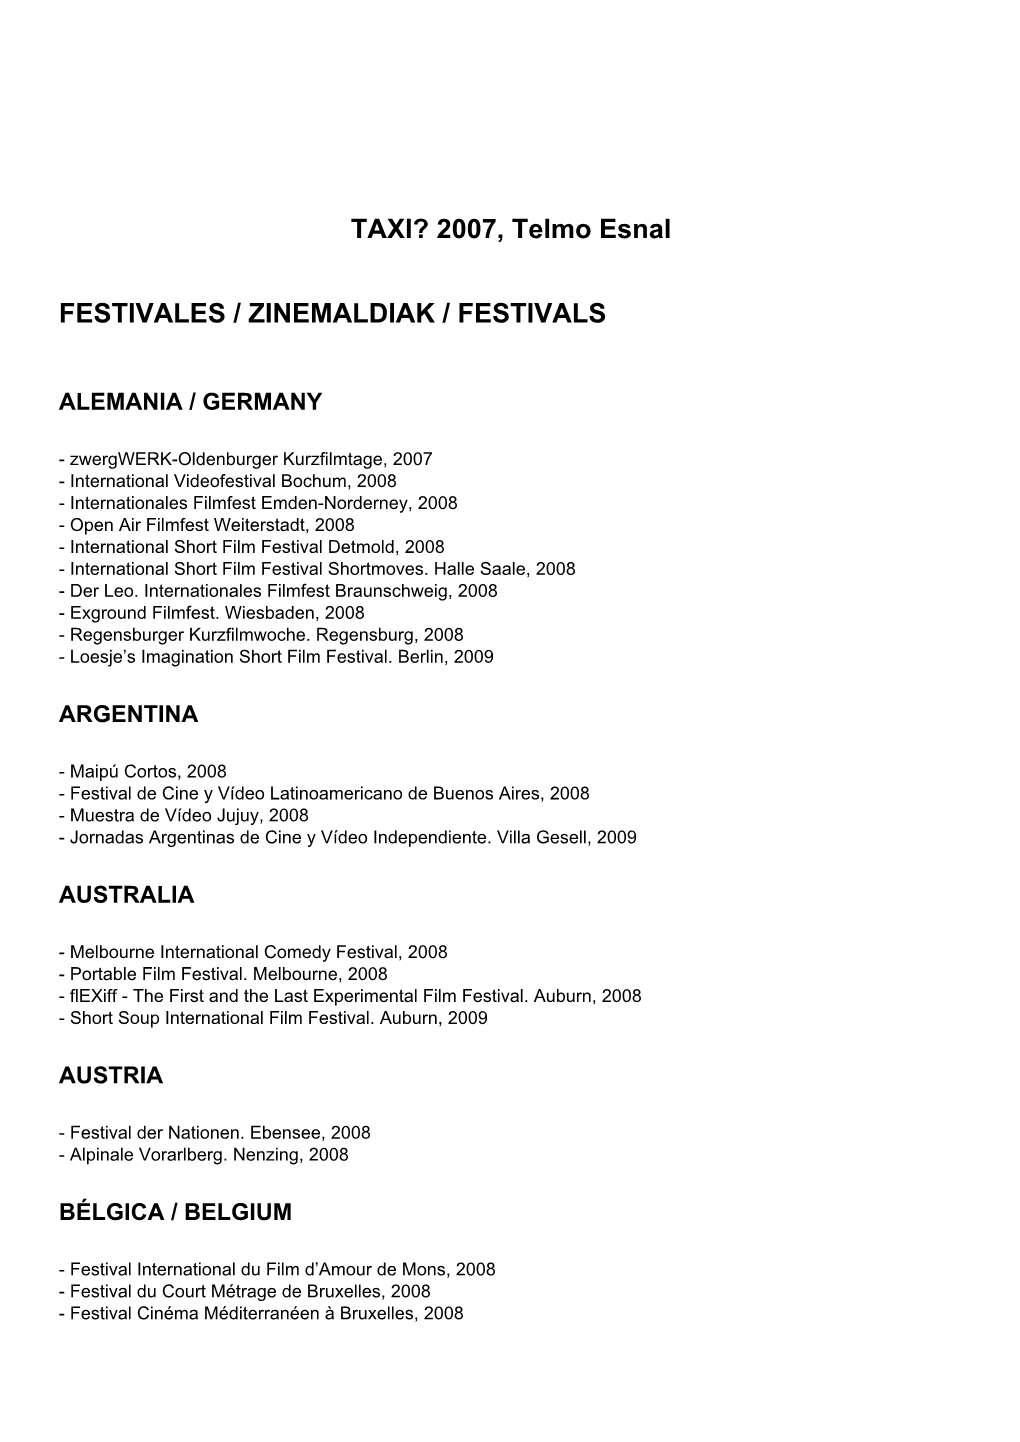 Festivales / Zinemaldiak / Festivals